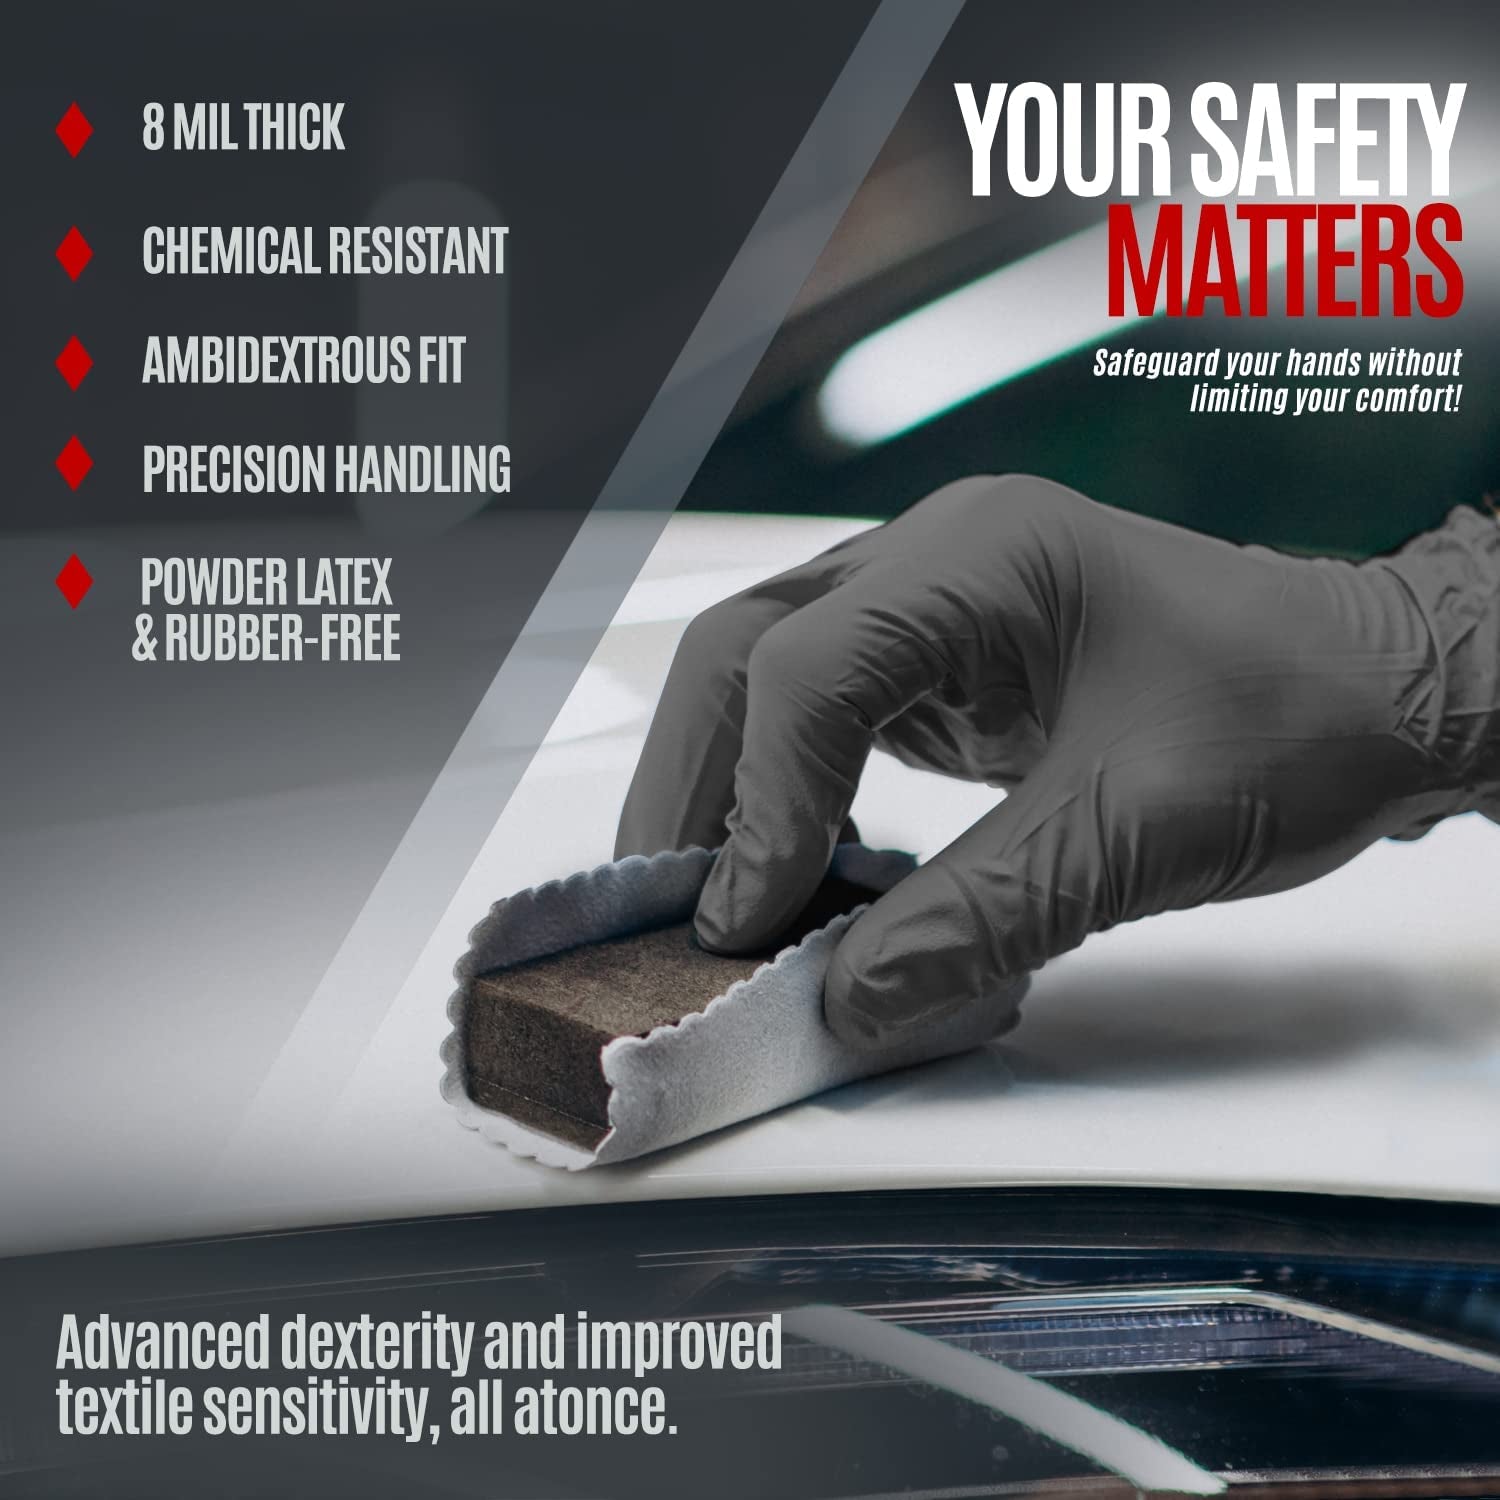 Maxx Strength Nitrile Industrial Black, 8 Mil Thick - Diamond Texture Disposable Heavy-Duty, Tear-Resistant